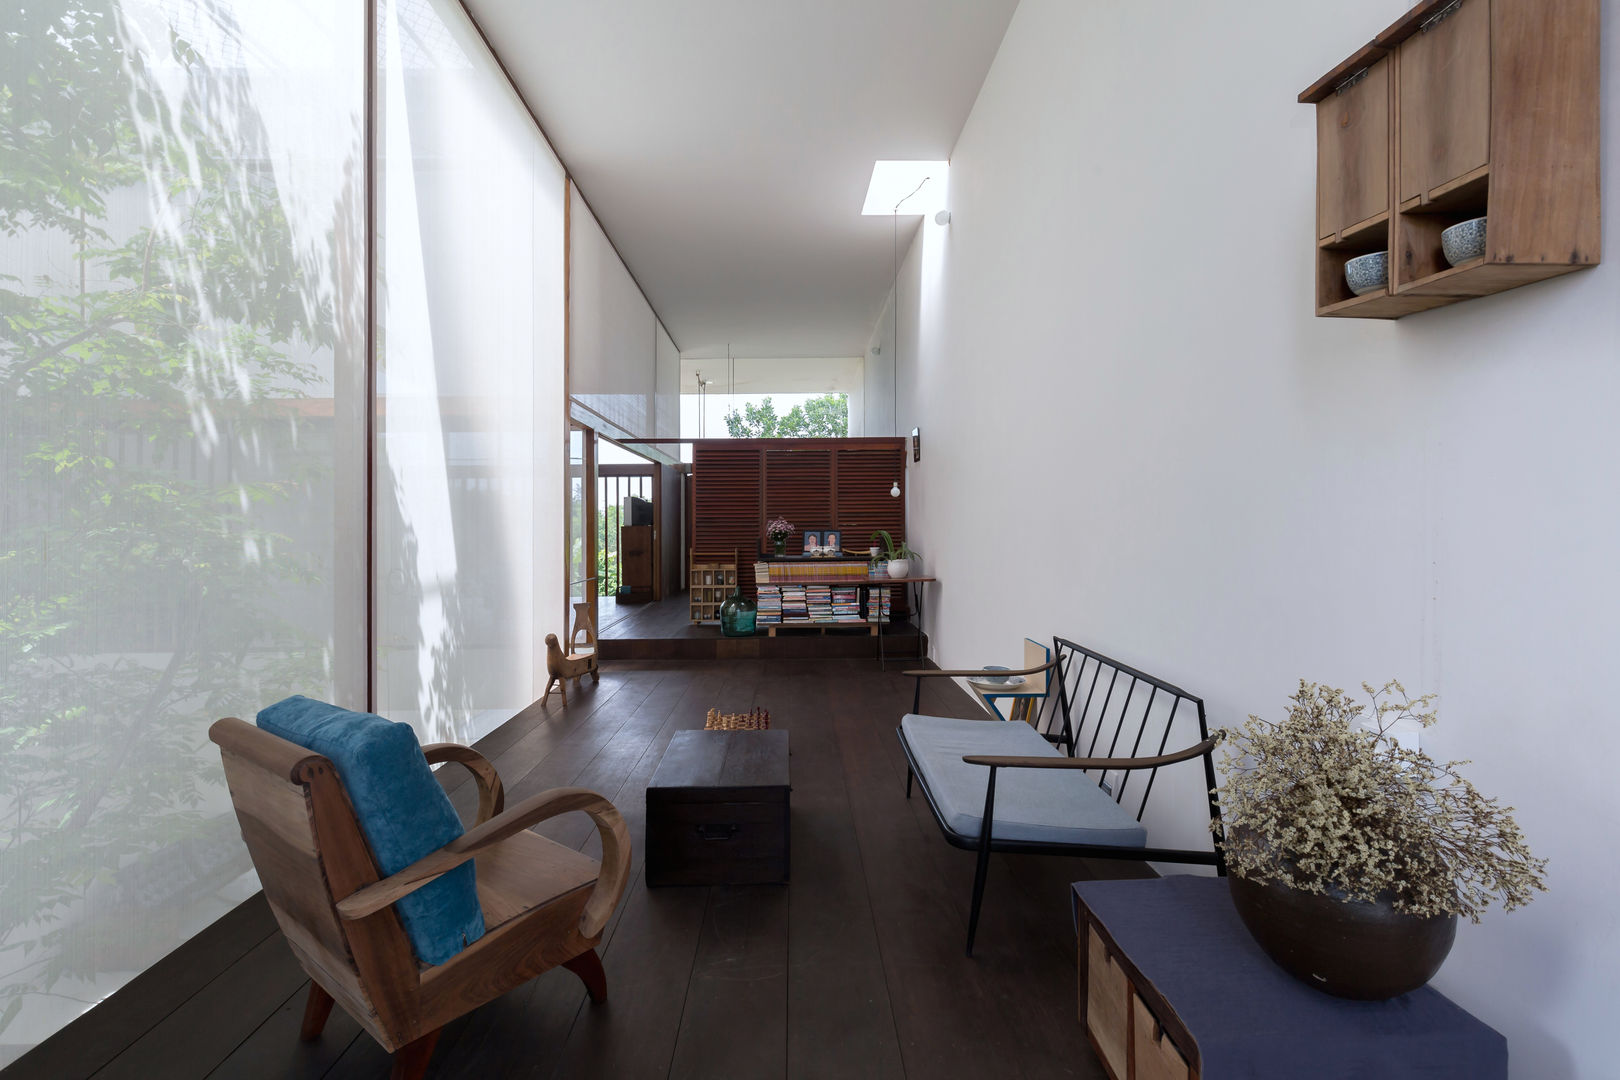 MA HOUSE, GERIRA ARCHITECTS GERIRA ARCHITECTS Salas de estilo minimalista